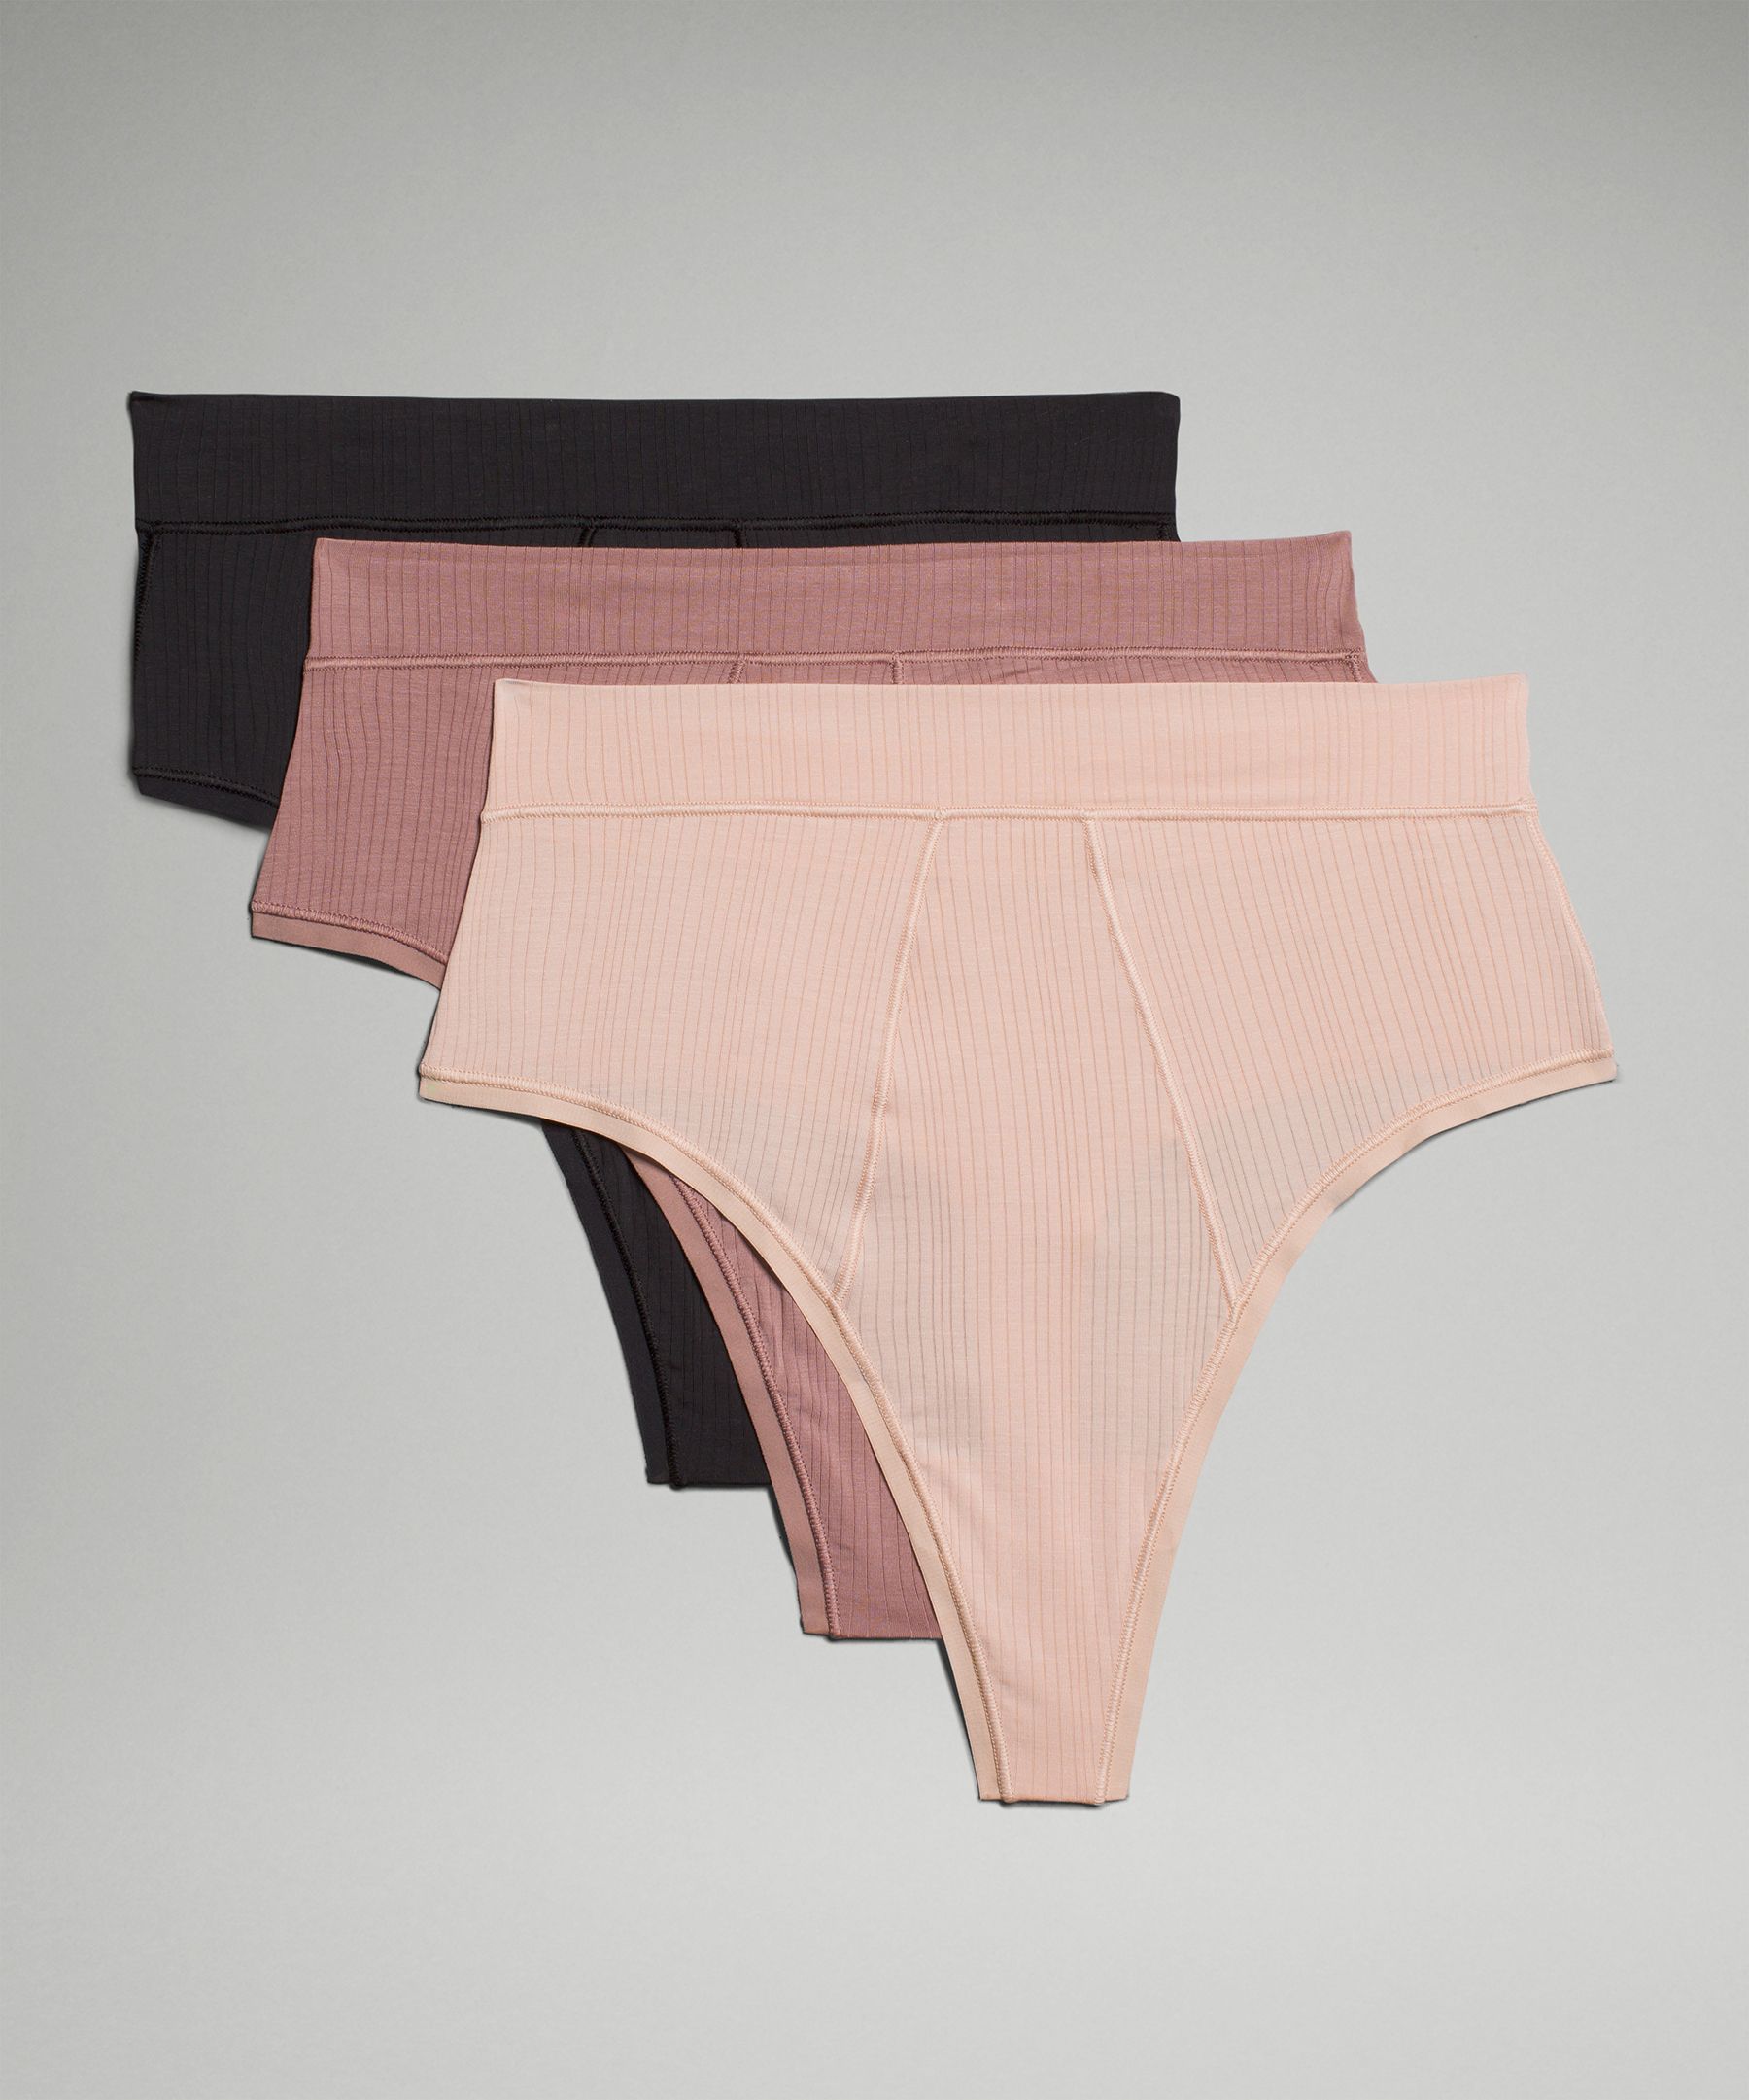 Lululemon athletica UnderEase High-Rise Thong Underwear *3 Pack, Women's